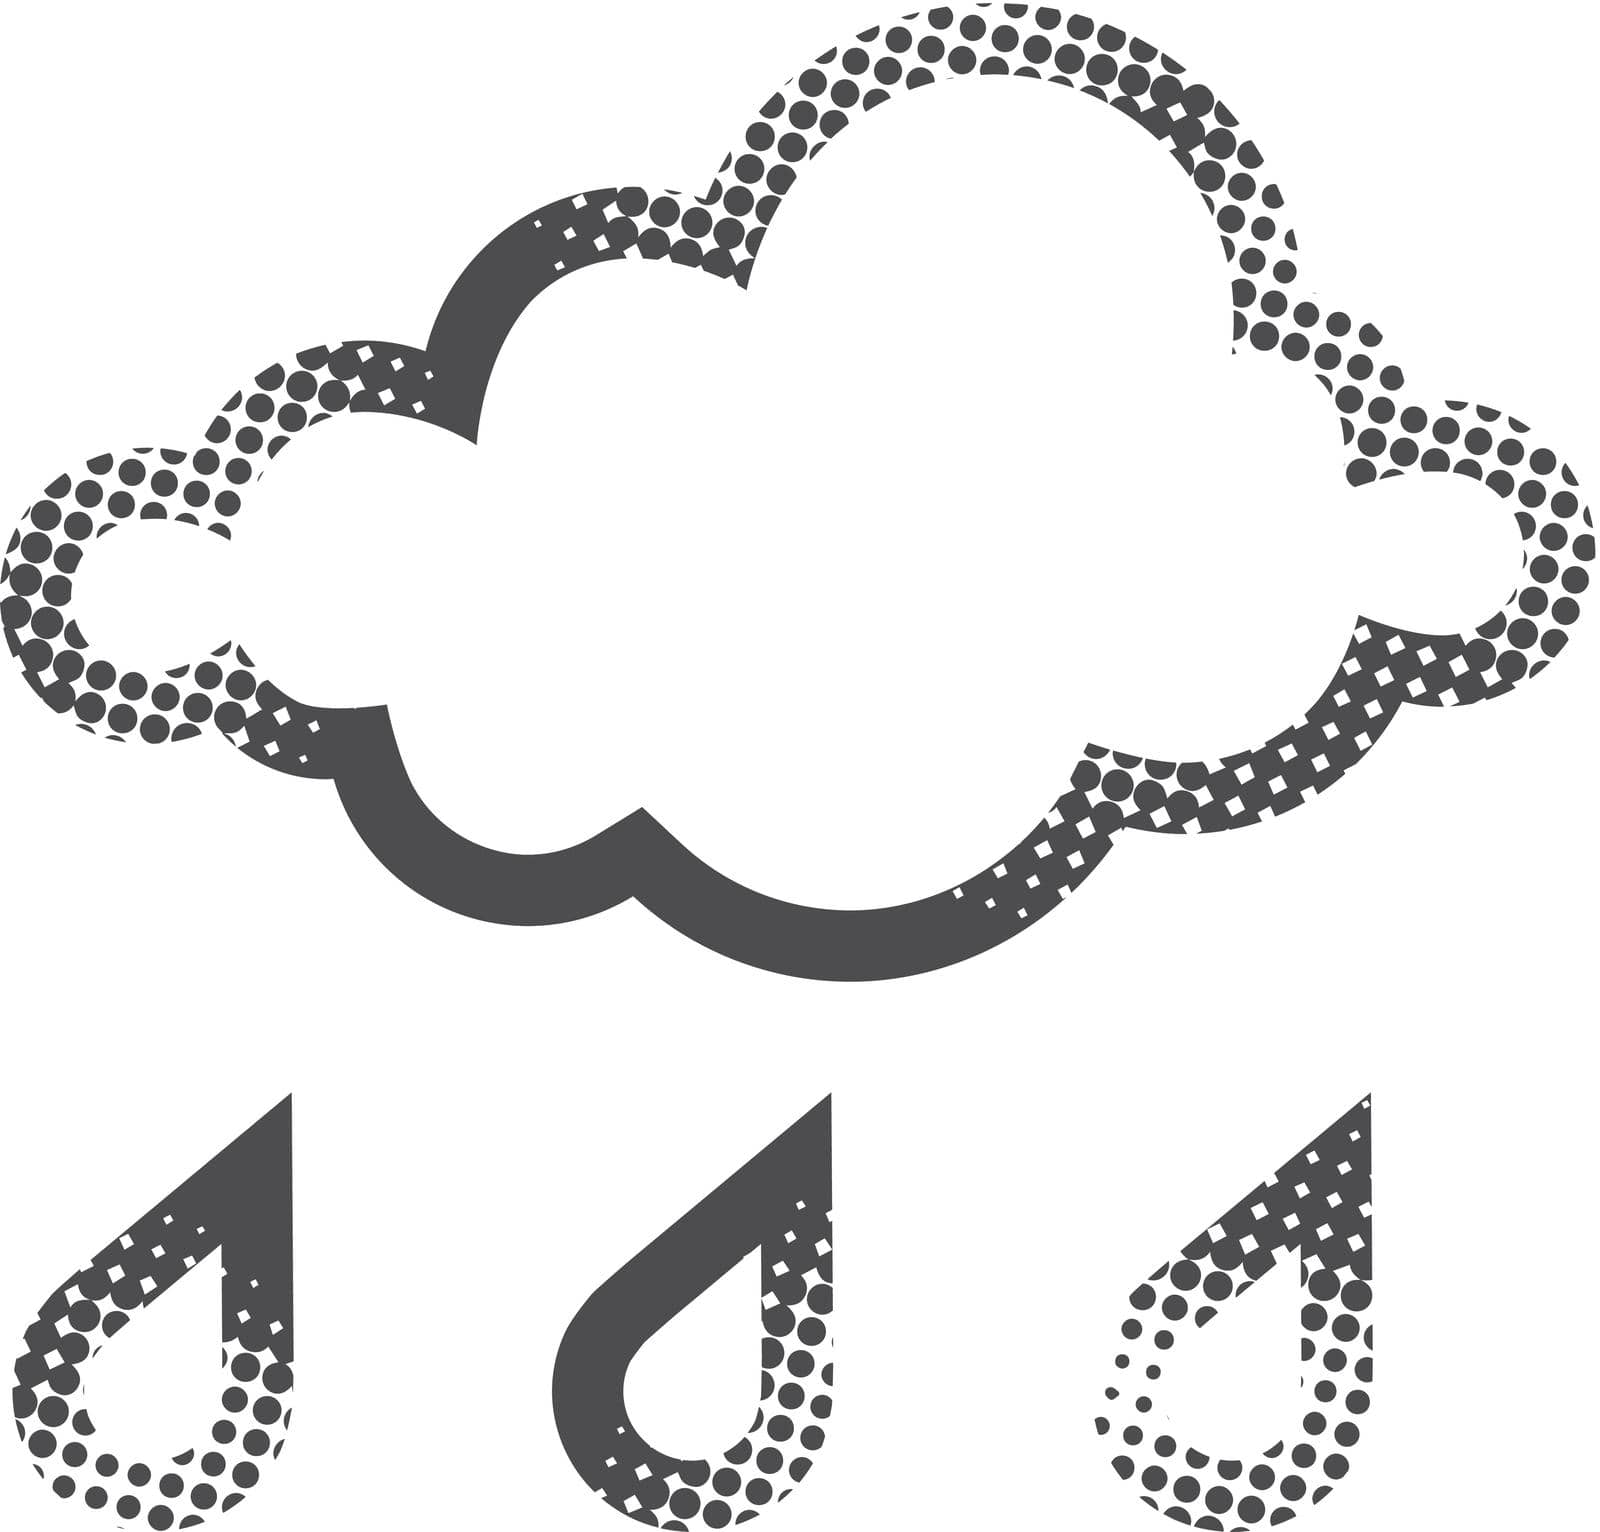 Rainy icon in halftone style. Black and white monochrome vector illustration.